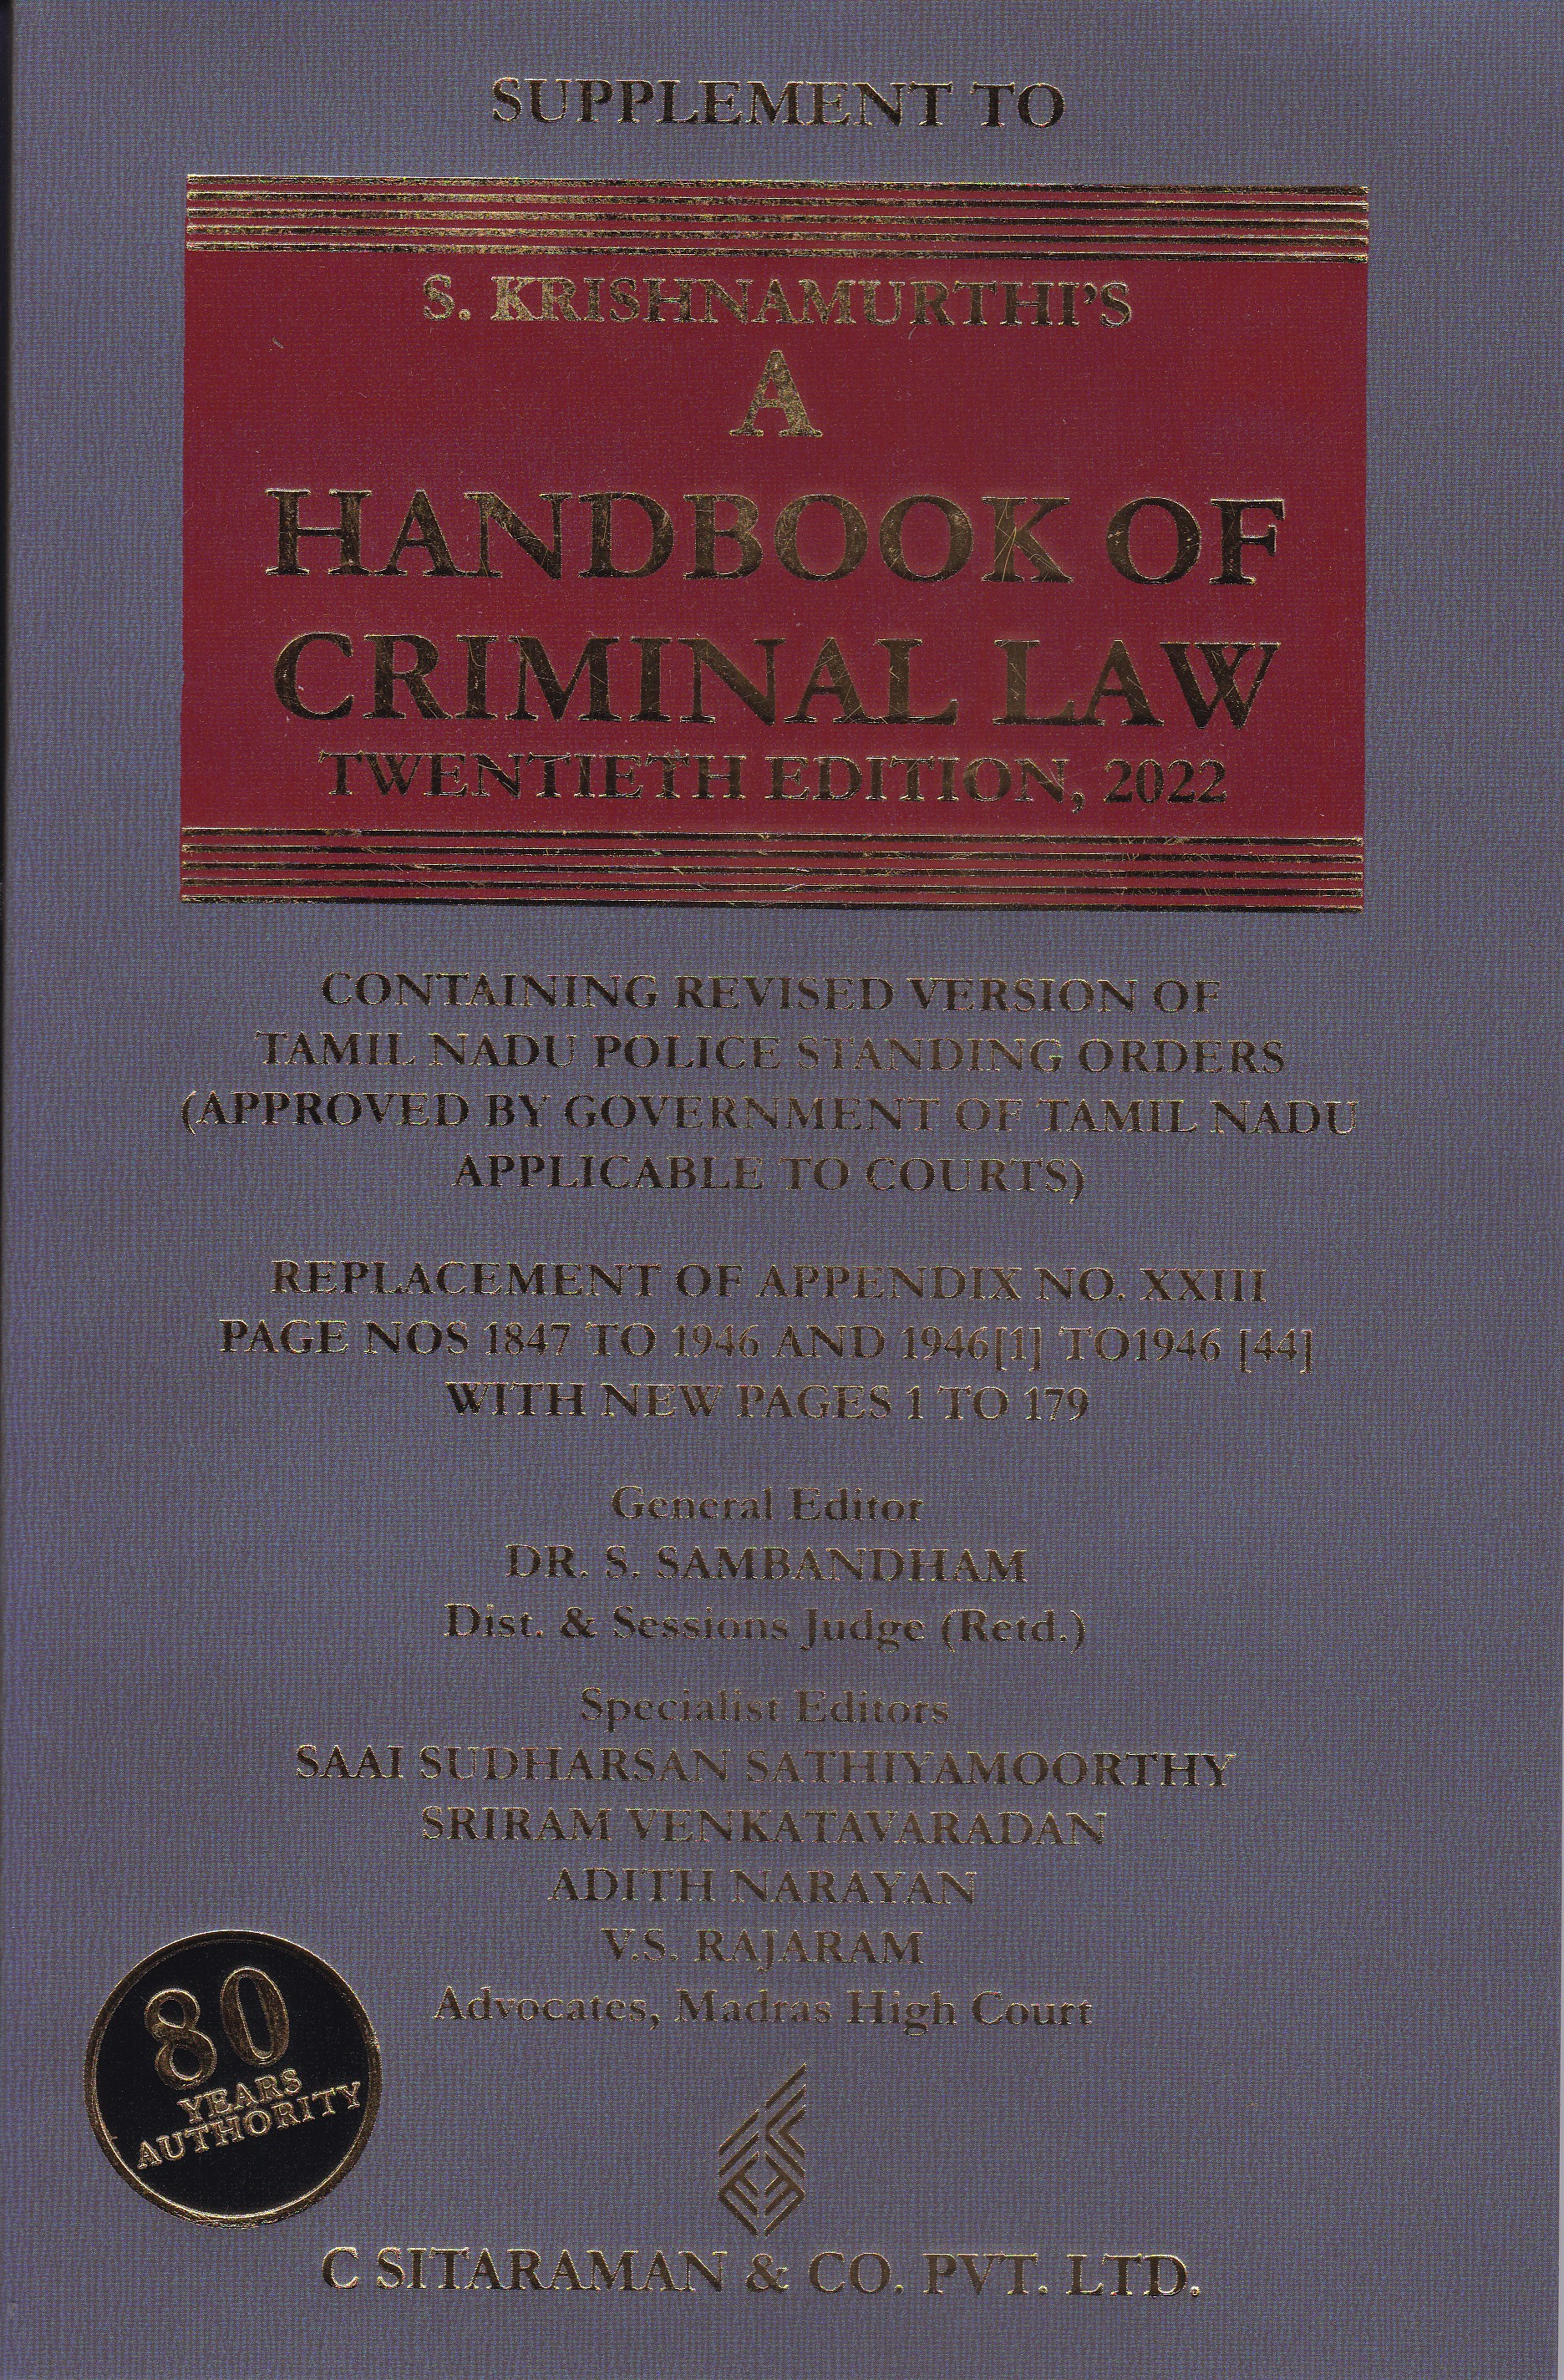 The Criminal Law Handbook